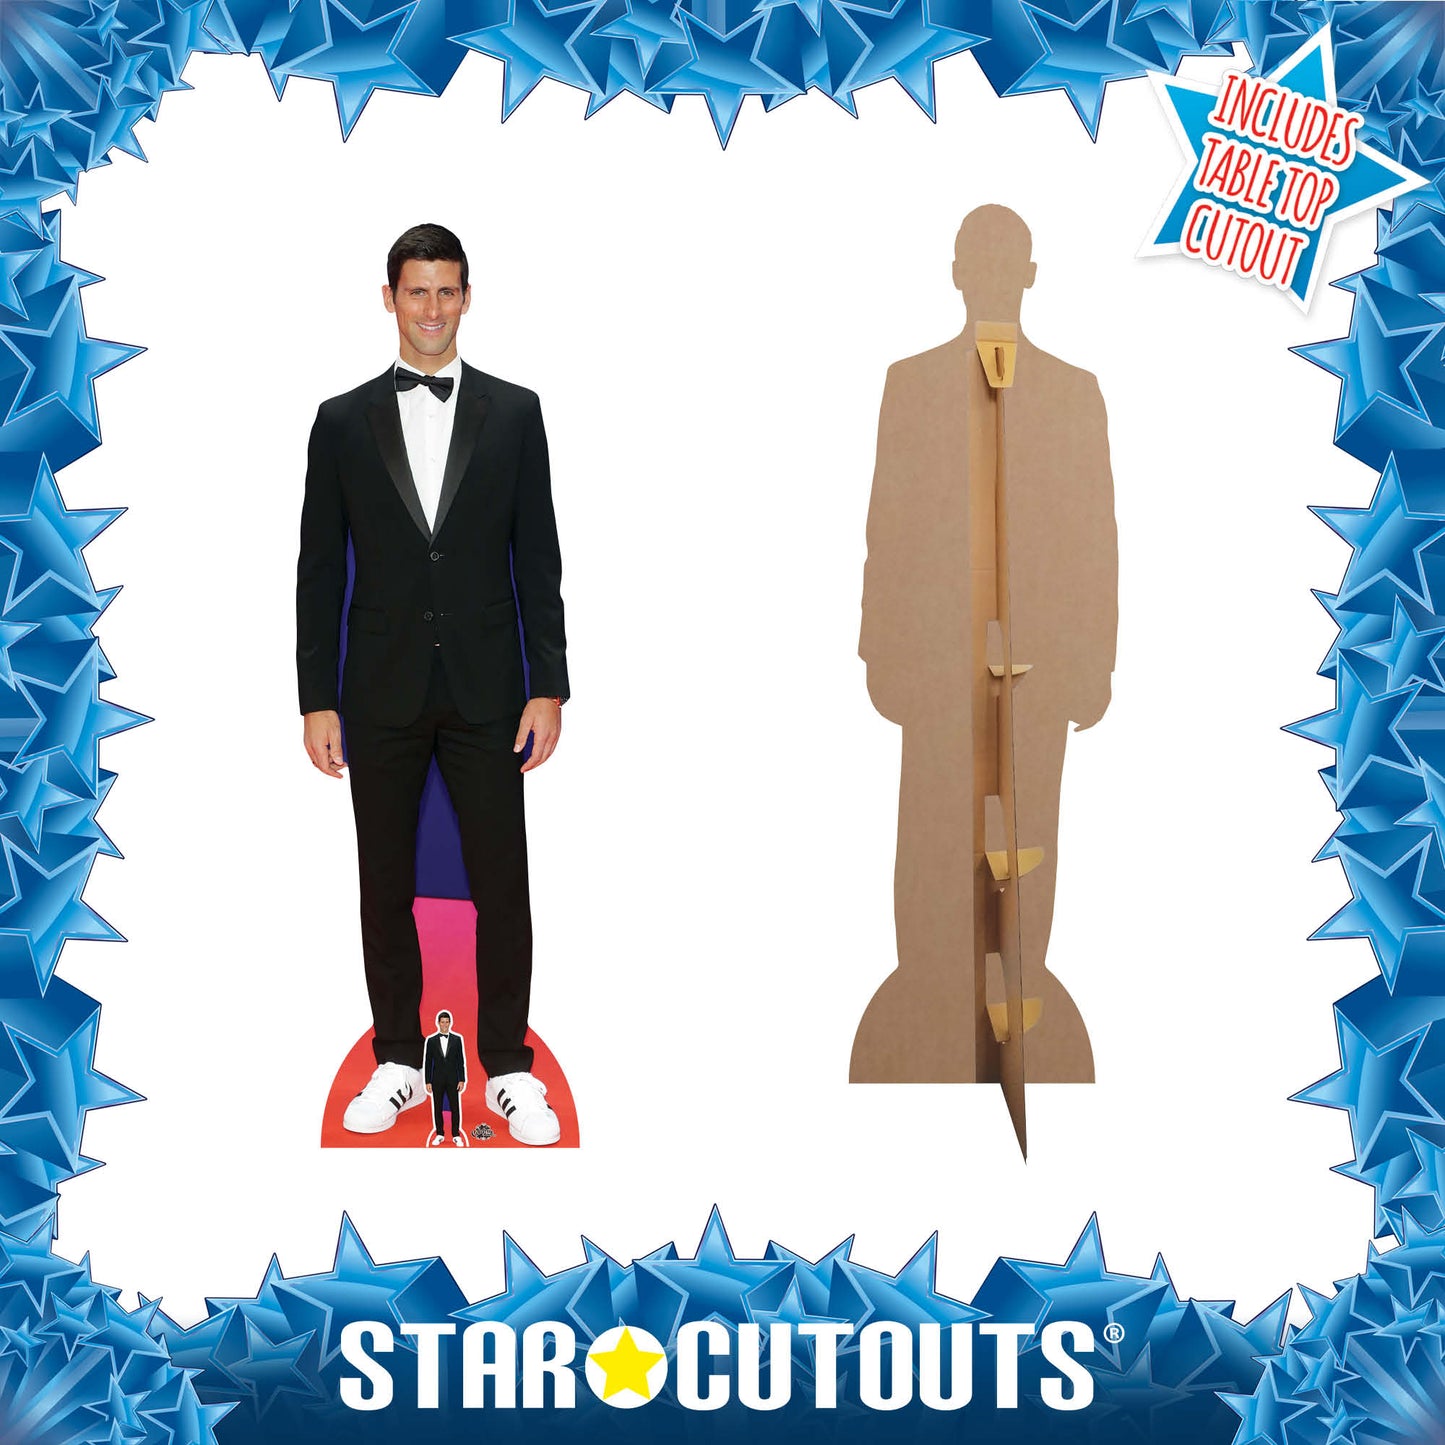 CS793 Novak Djokovic Tennis Player Smart Black Suit Height 190cm Lifesize Cardboard Cut Out With Mini